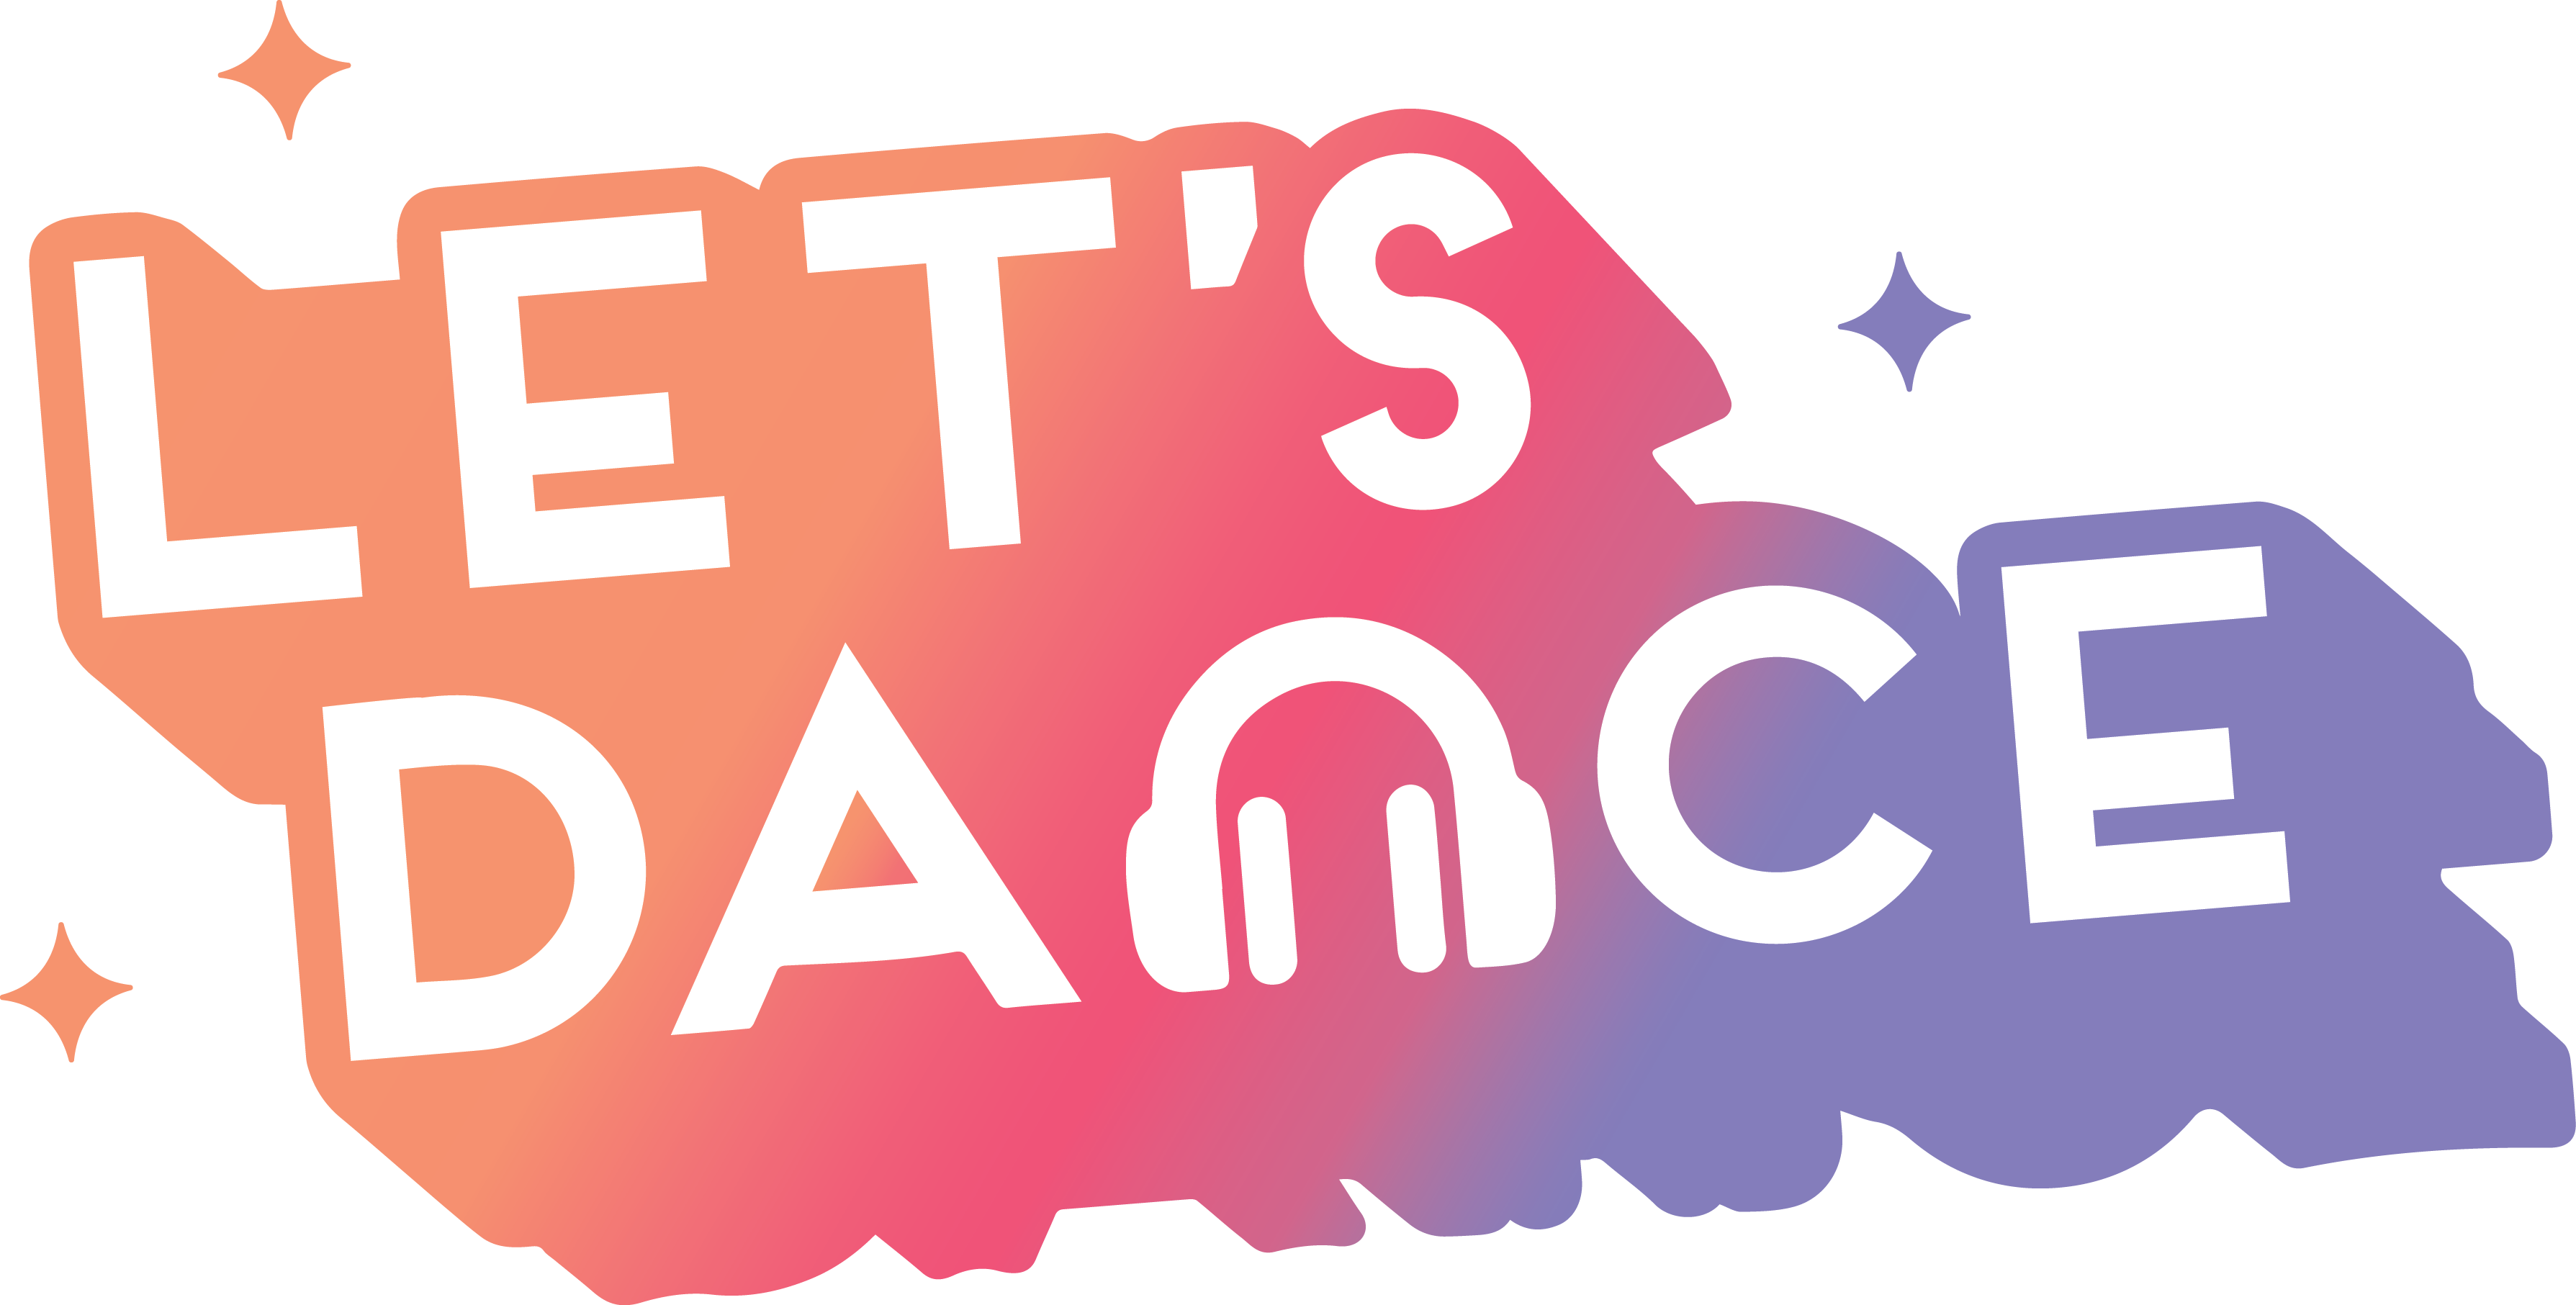 Let s hear. Lets Dance логотип. Lets Dance надпись. Lets Dance иллюстрация. Lets Colour логотип.